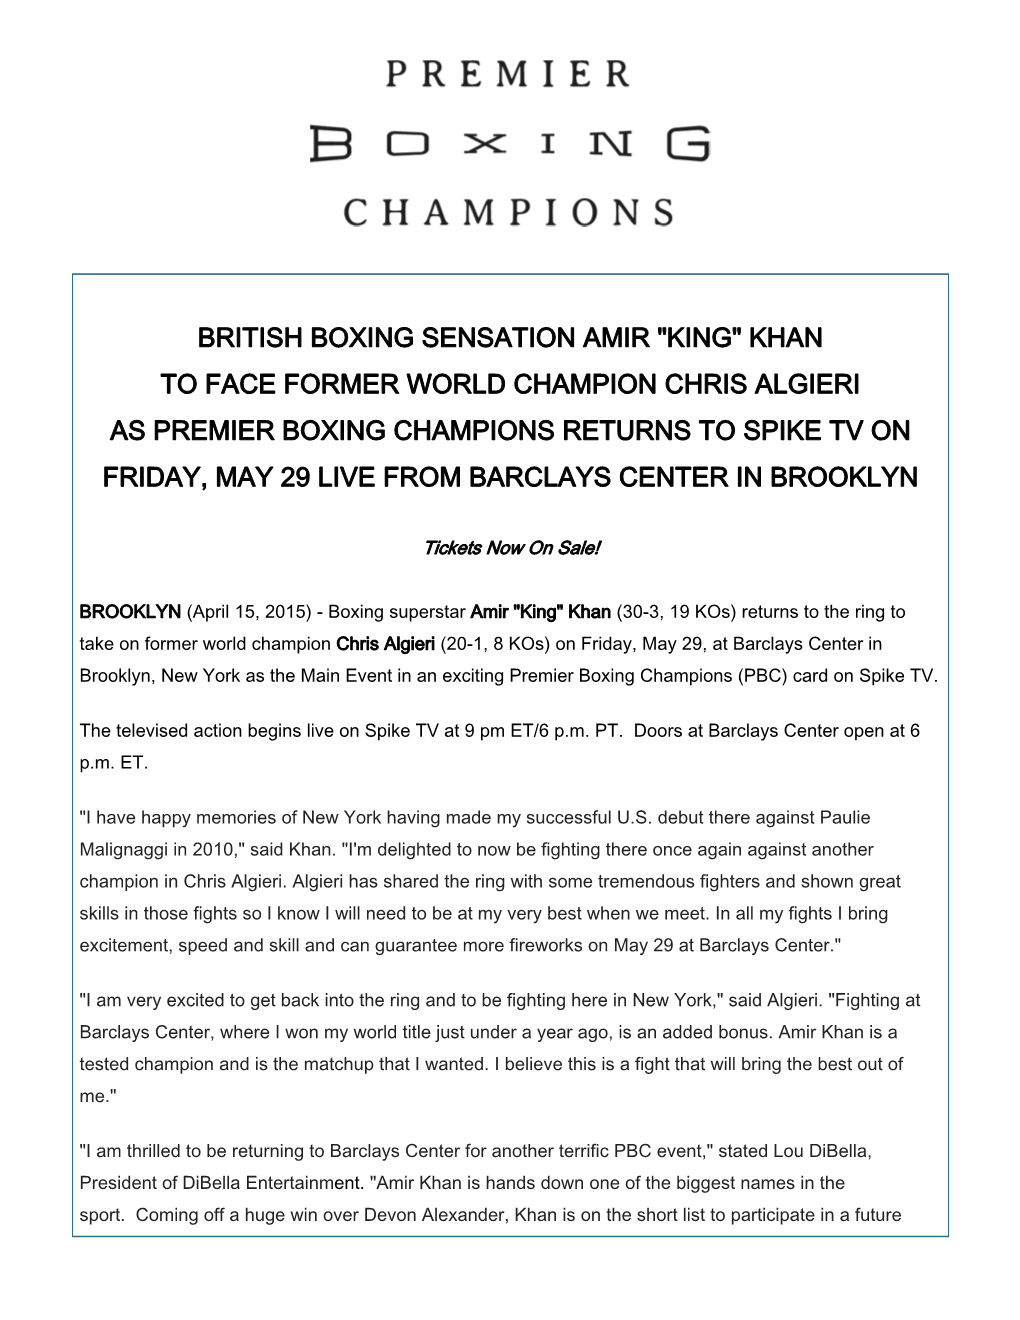 British Boxing Sensation Amir "King" Khan